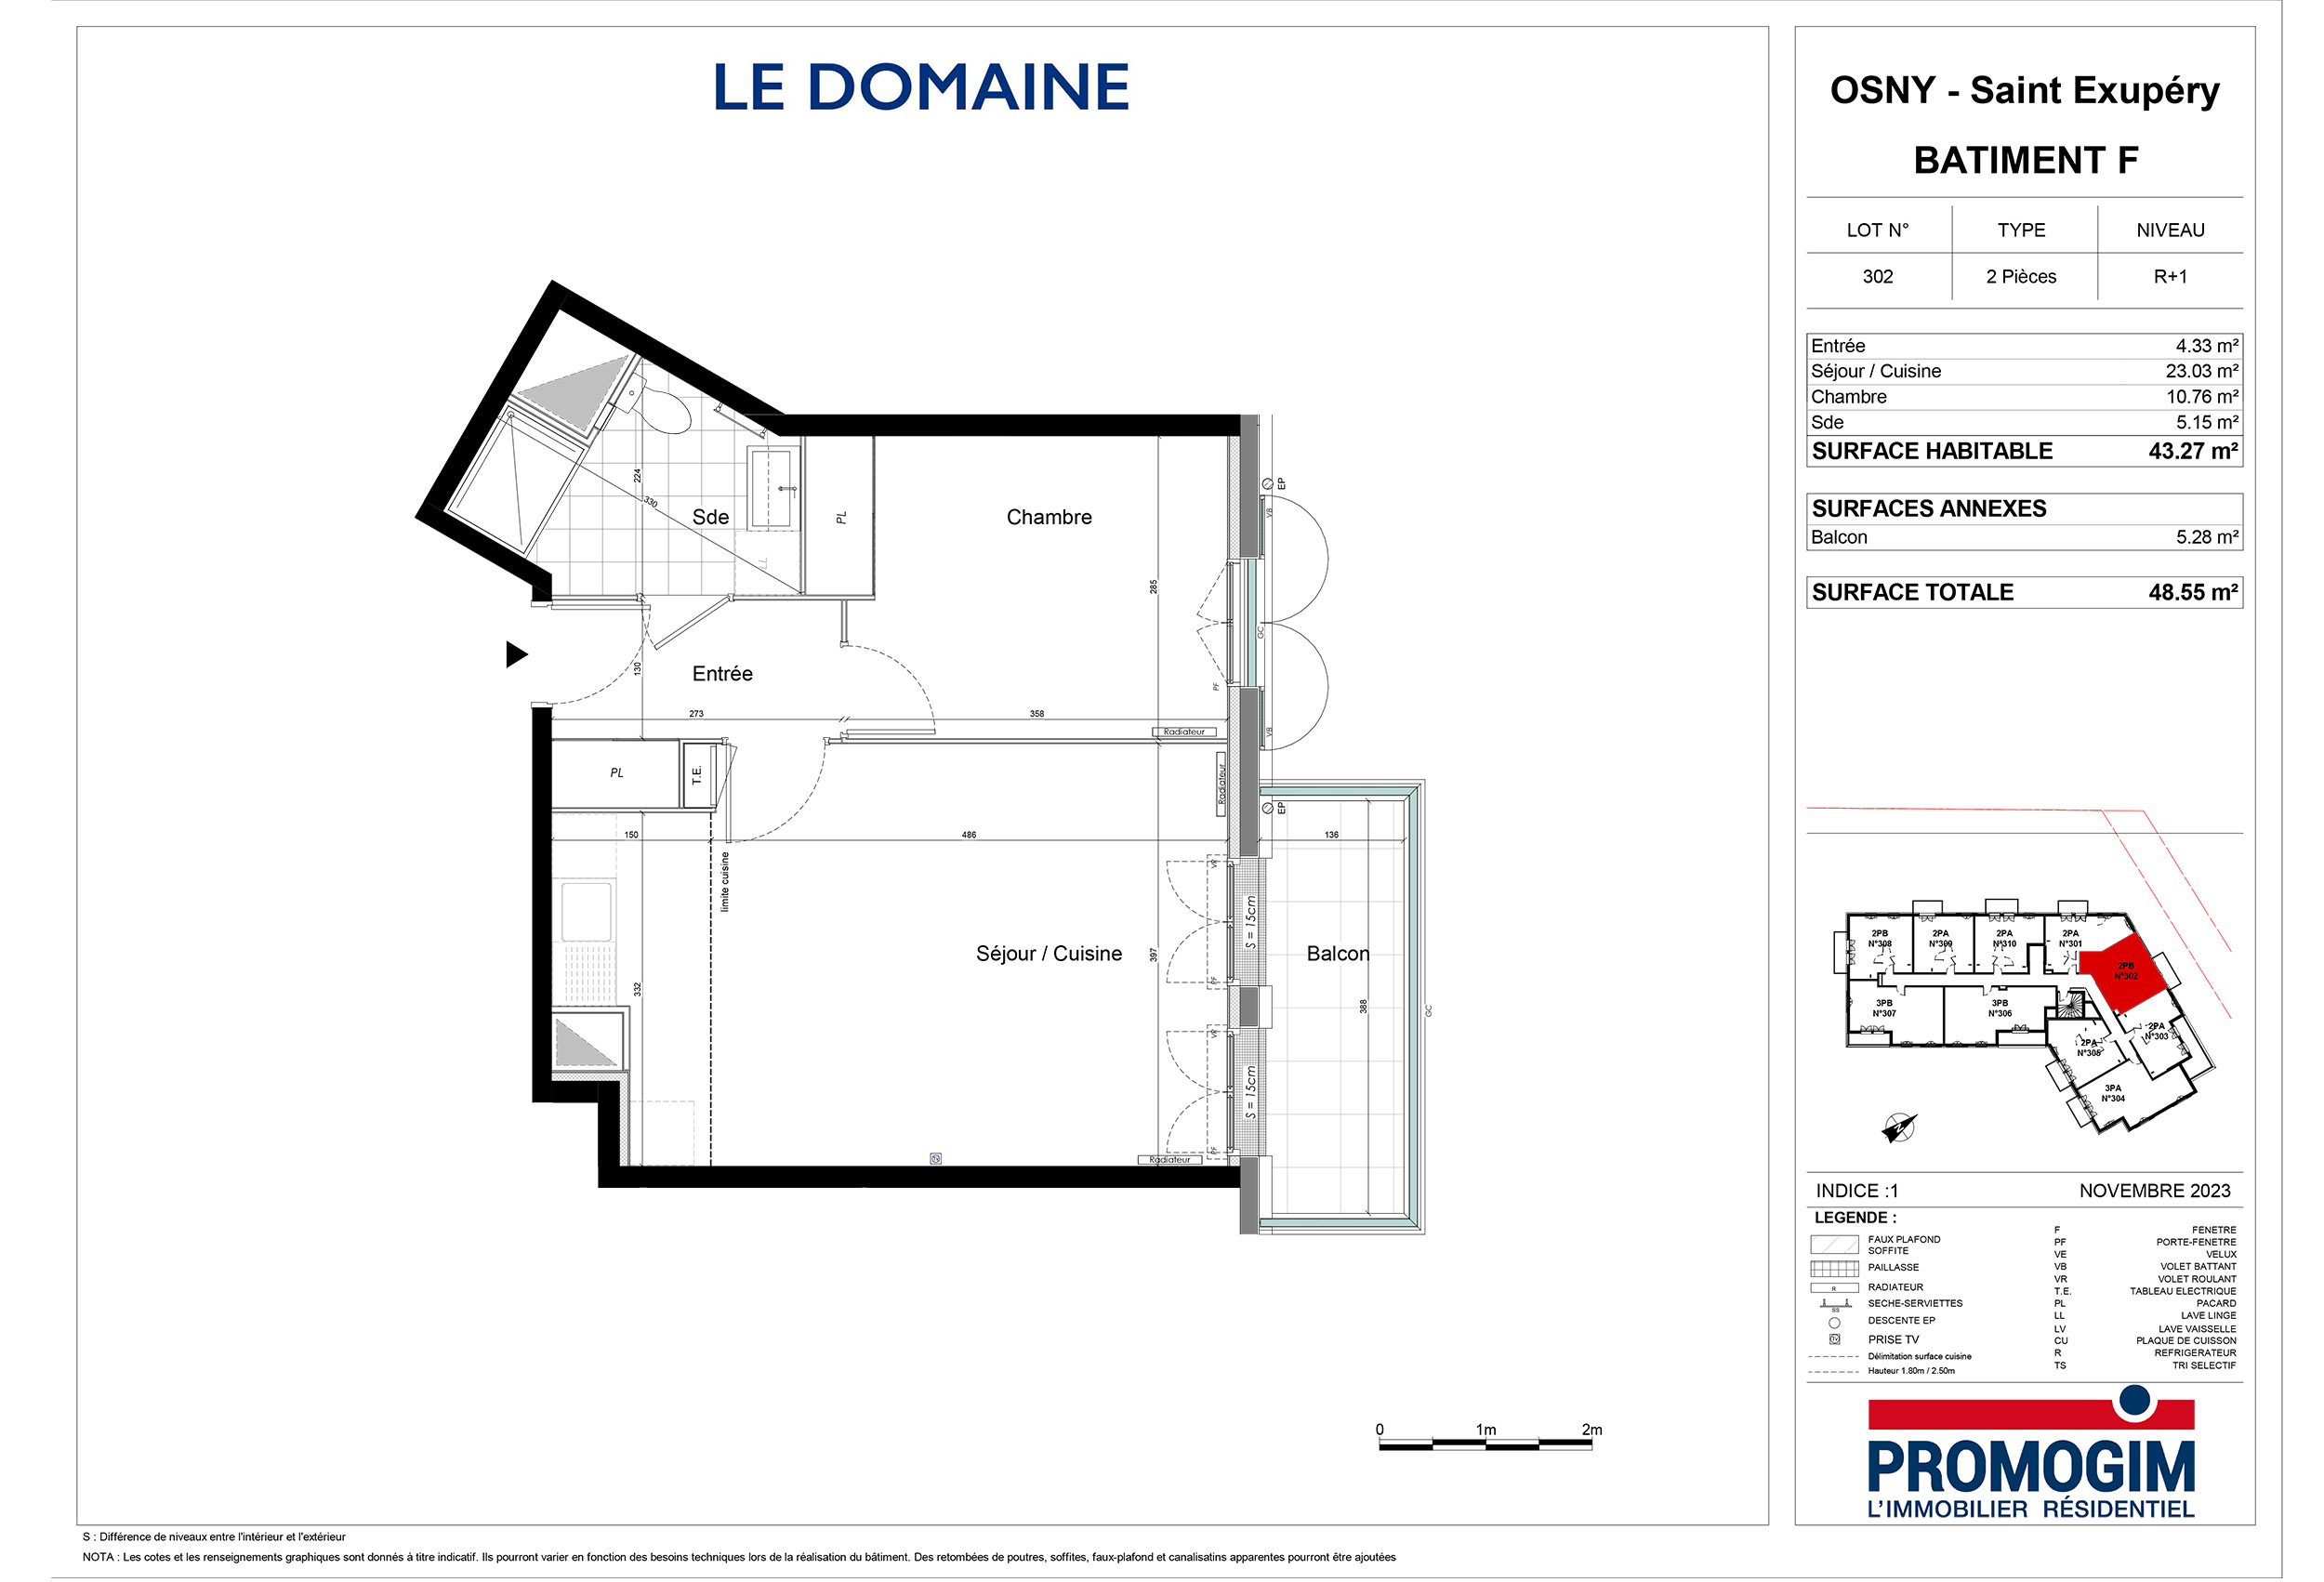 Osny - Le Domaine - Lot f302